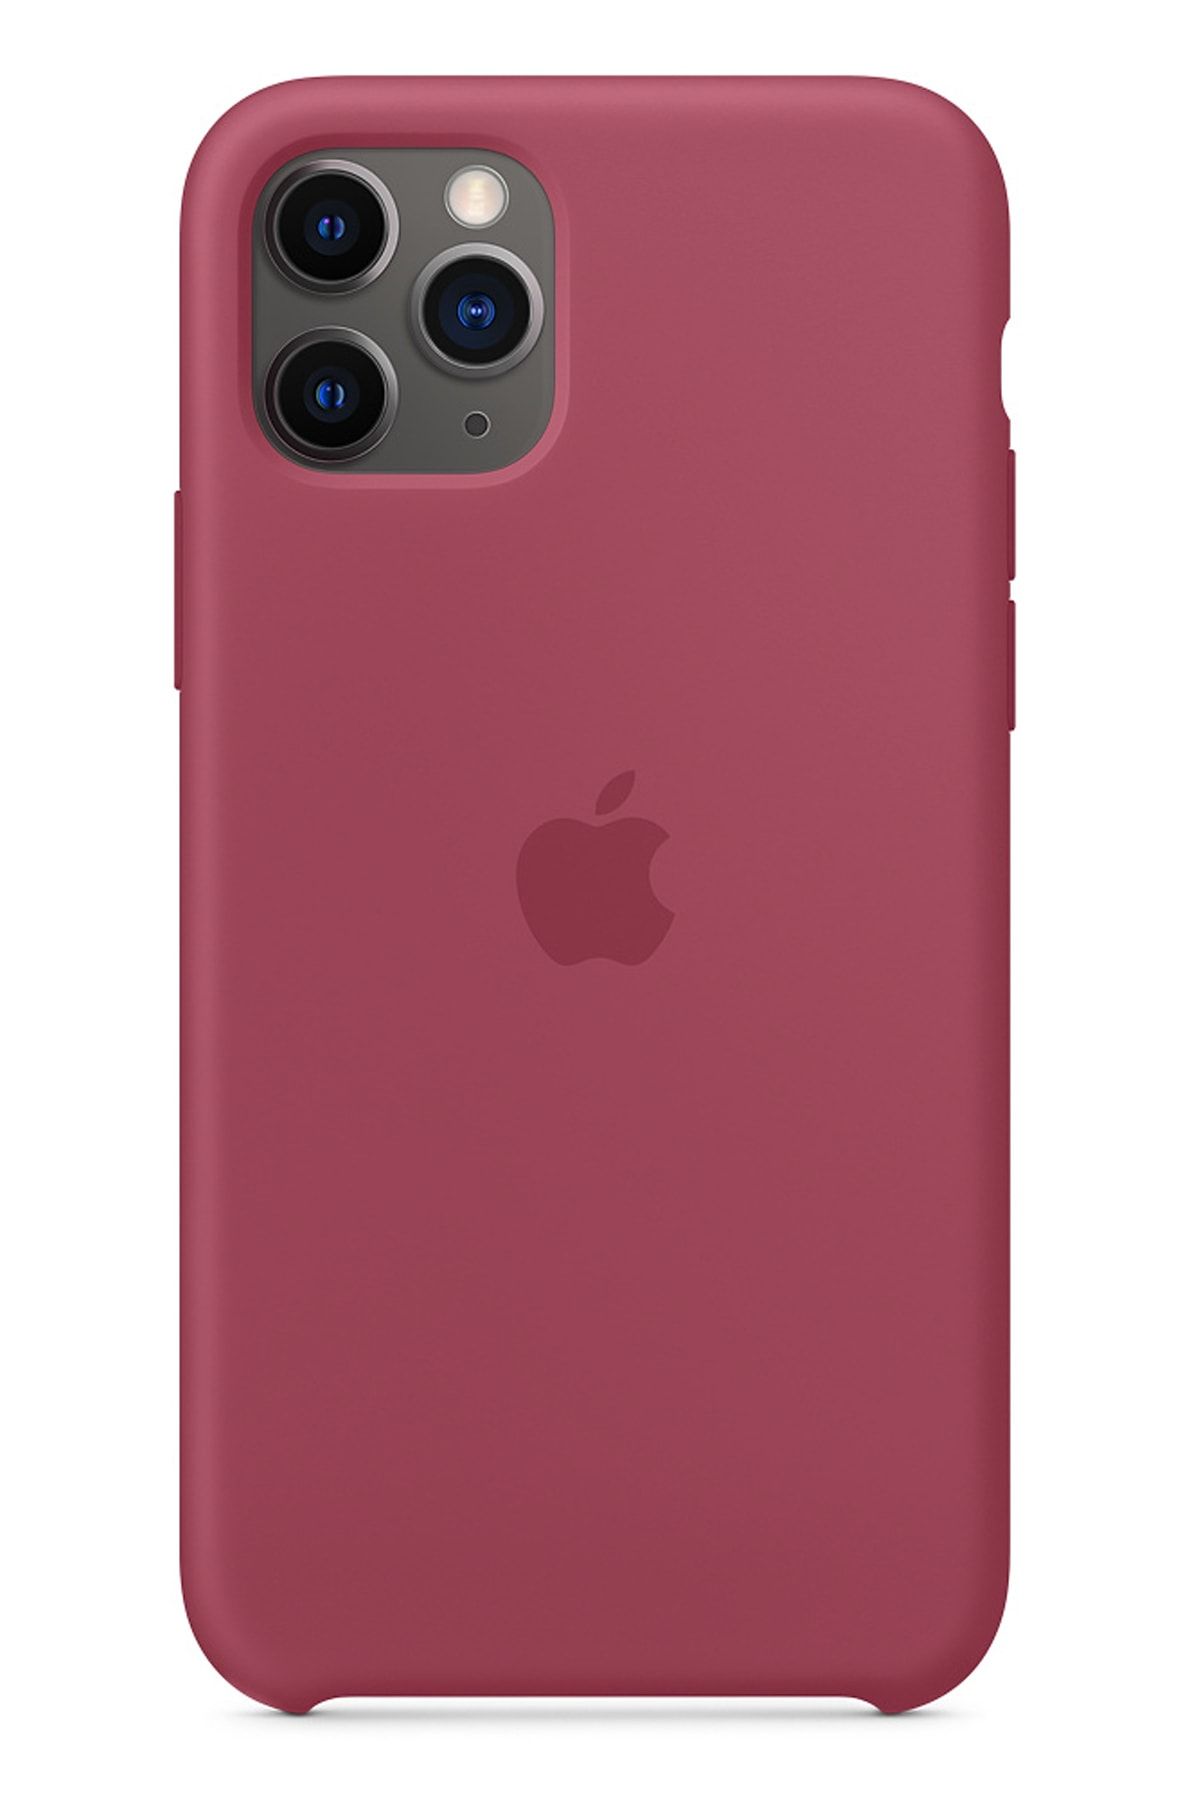 Ebotek Apple Iphone 11 Pro Max Silikon Kılıf Bordo